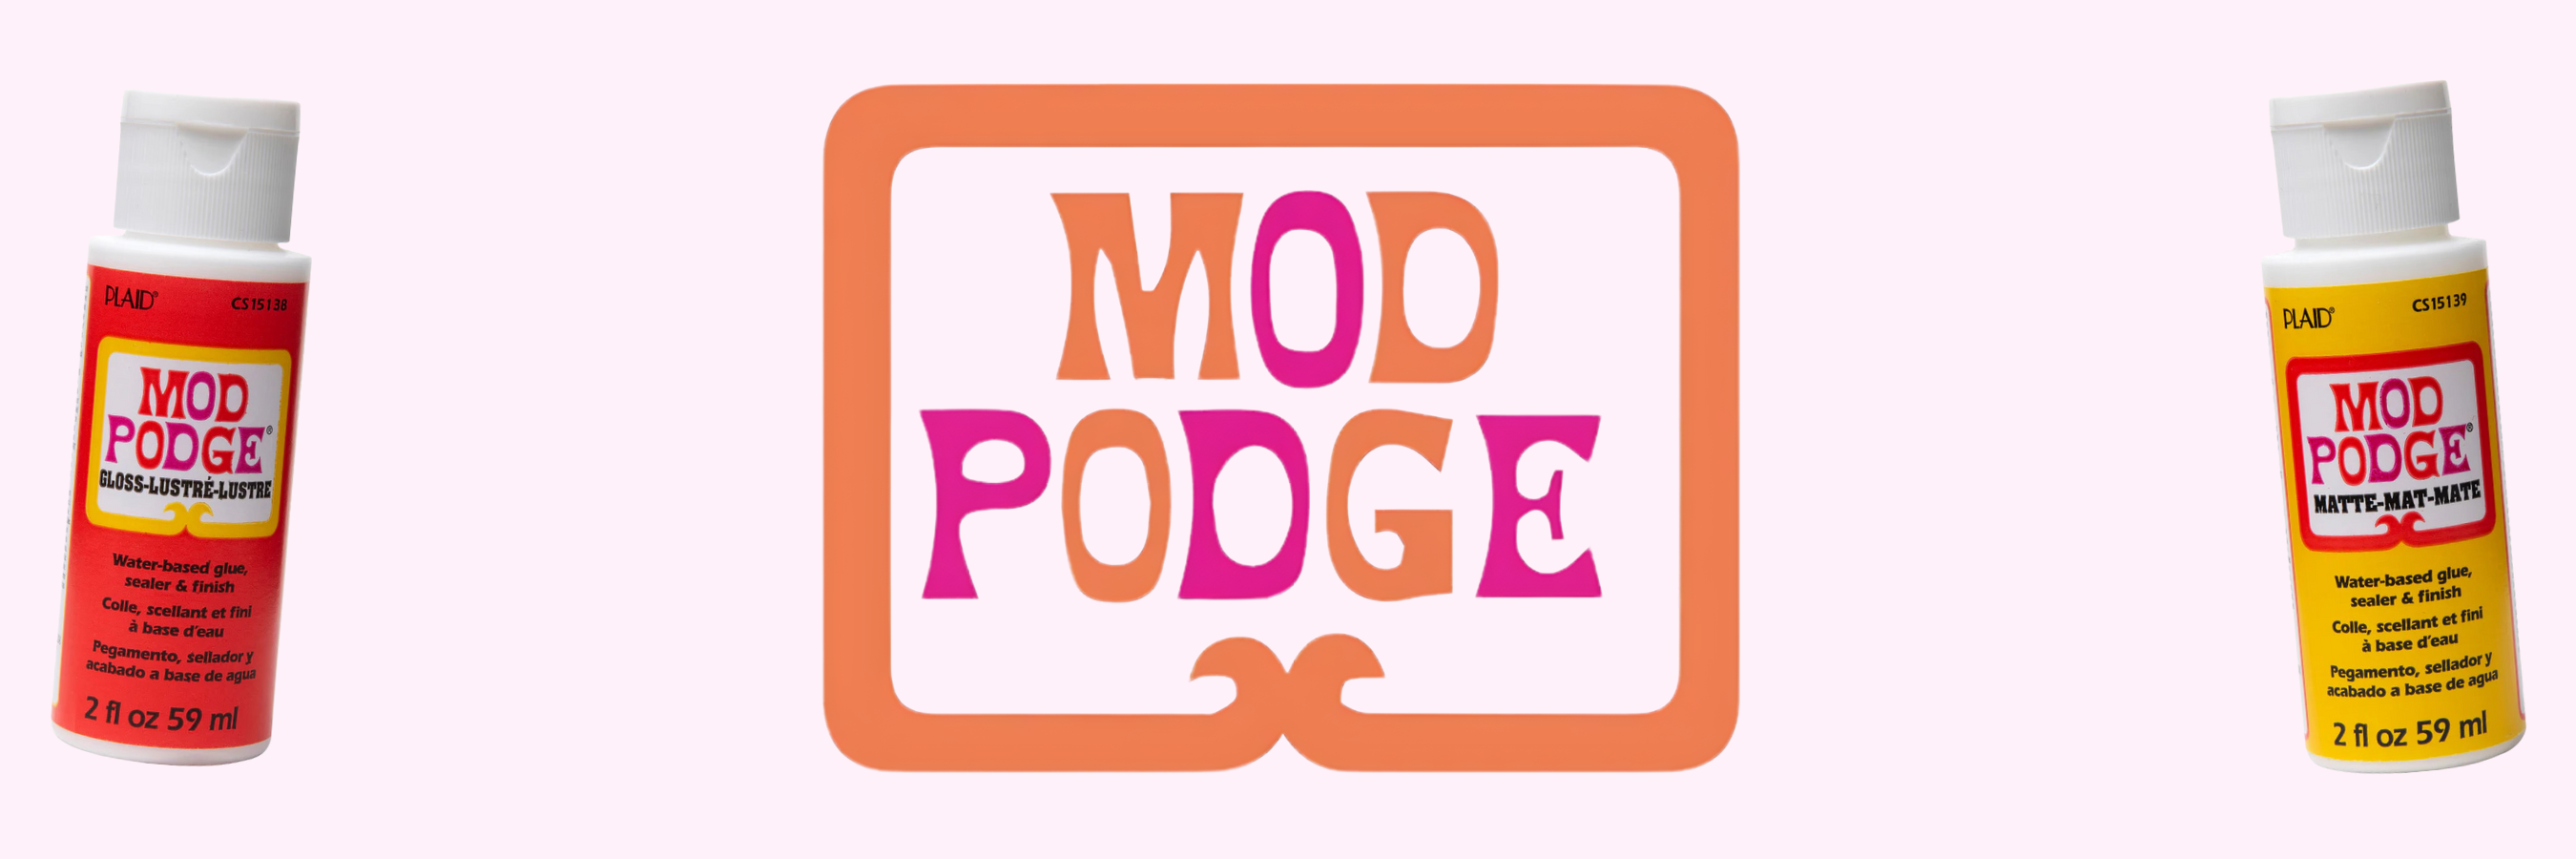 Mod Podge Decoupage Kit (Mod Podge with Foam Brushes-8 oz.)